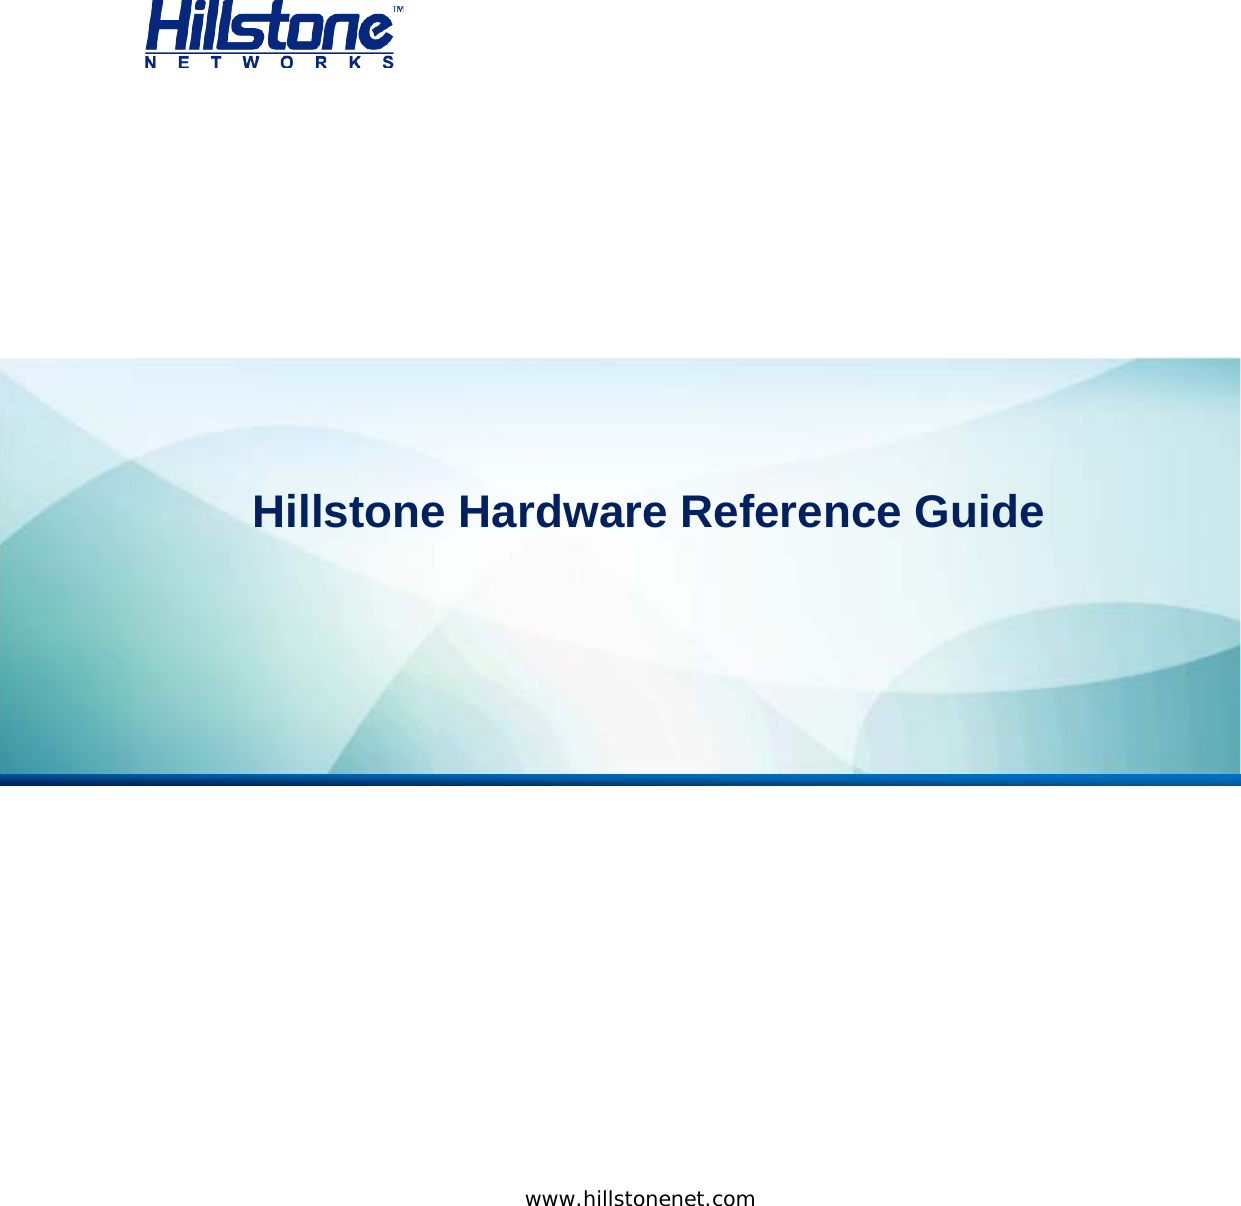                          Hillstone StoneOS User Manual     Hillstone Hardware Reference Guide       www.hillstonenet.com  